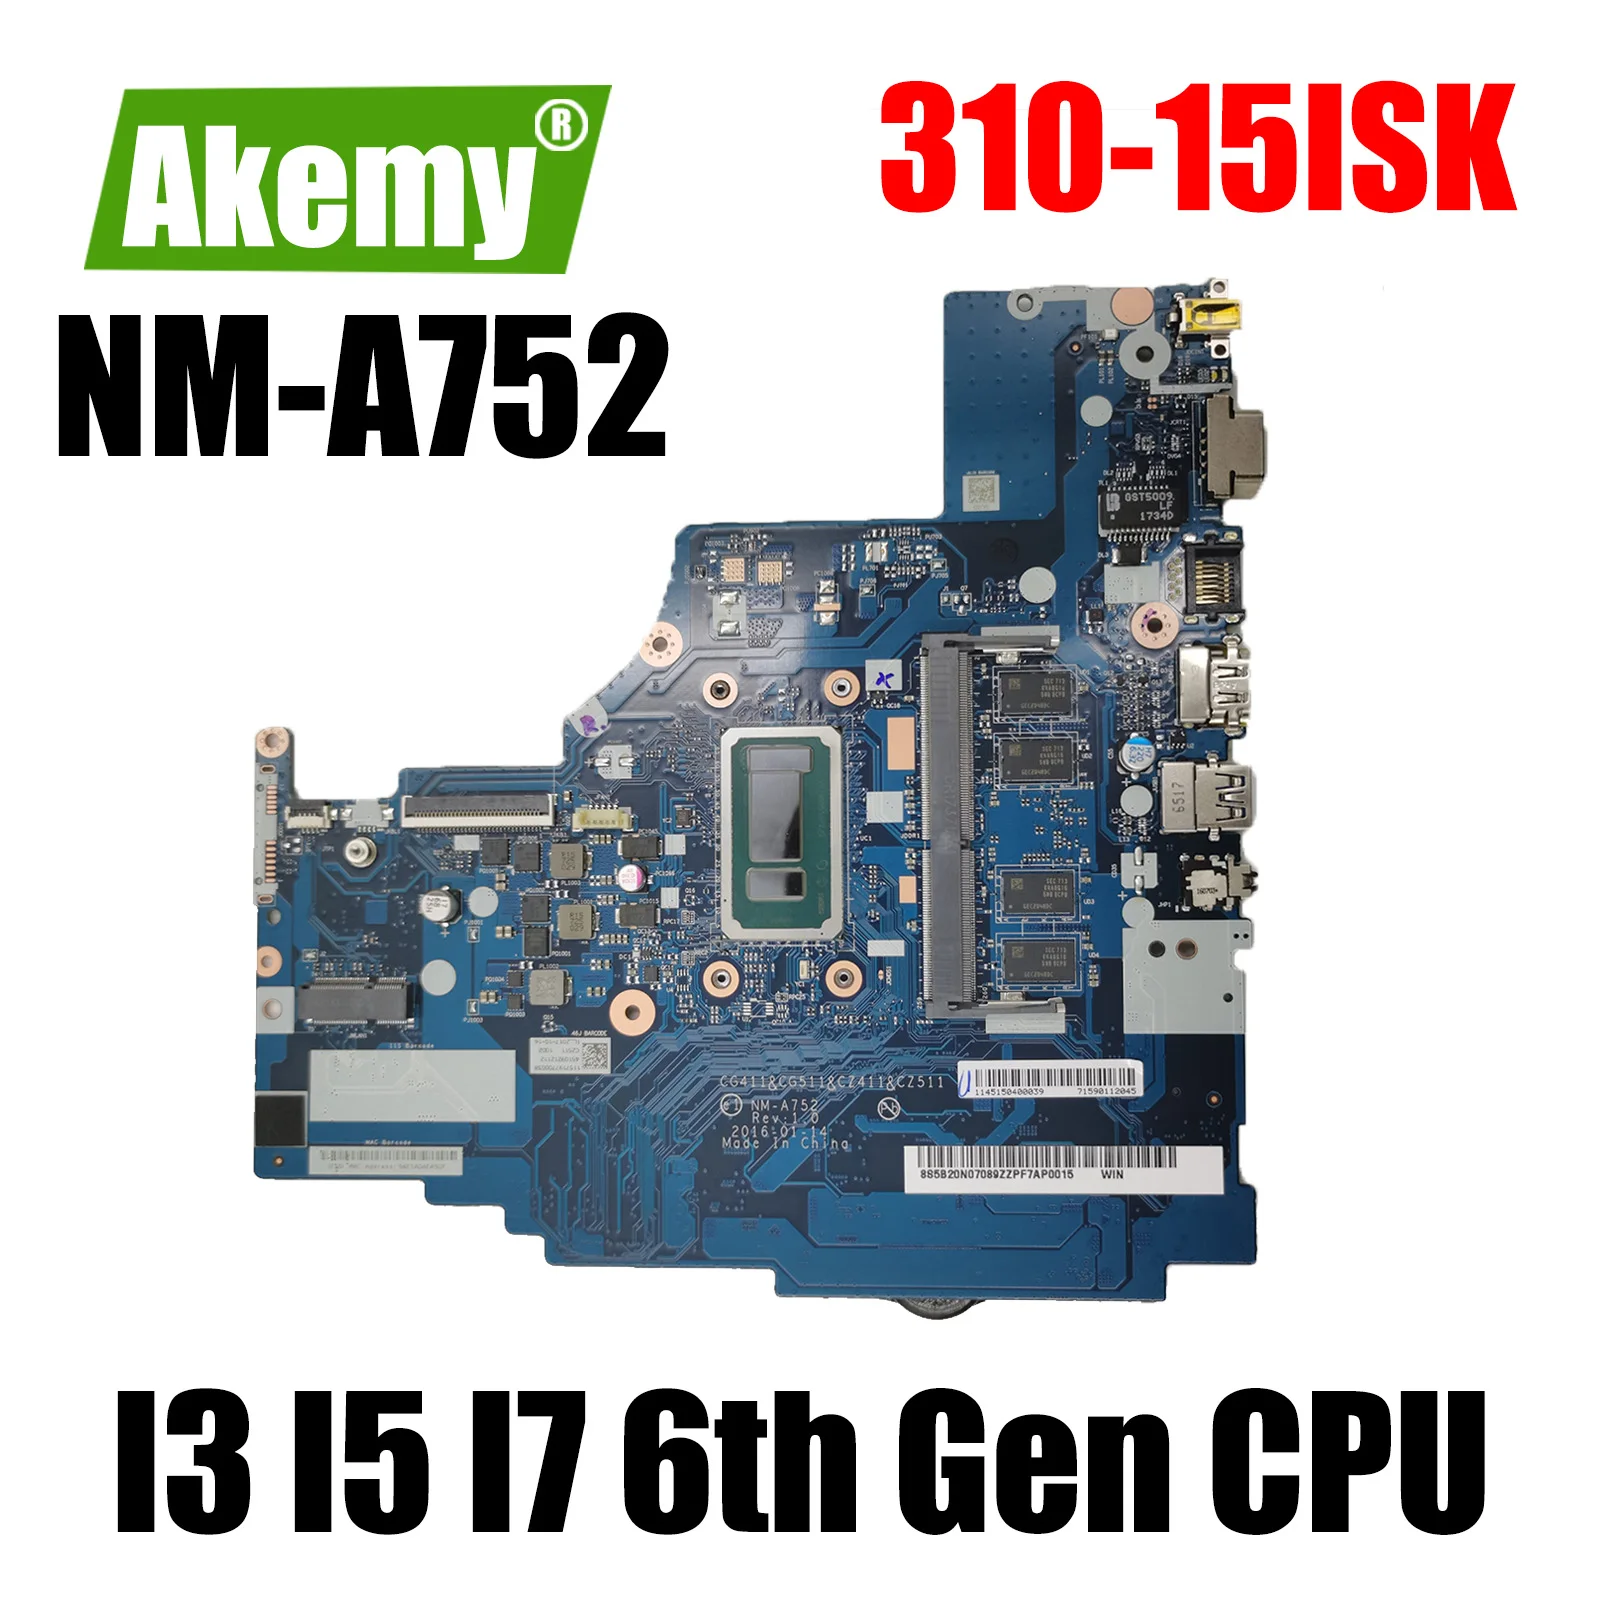 

NM-A752 Motherboard for Lenovo IdeaPad 310-15ISK Laptop Motherboard Mainboard I3 I5 I7 6th Gen CPU MEM 4GB RAM Intel HD Graphics